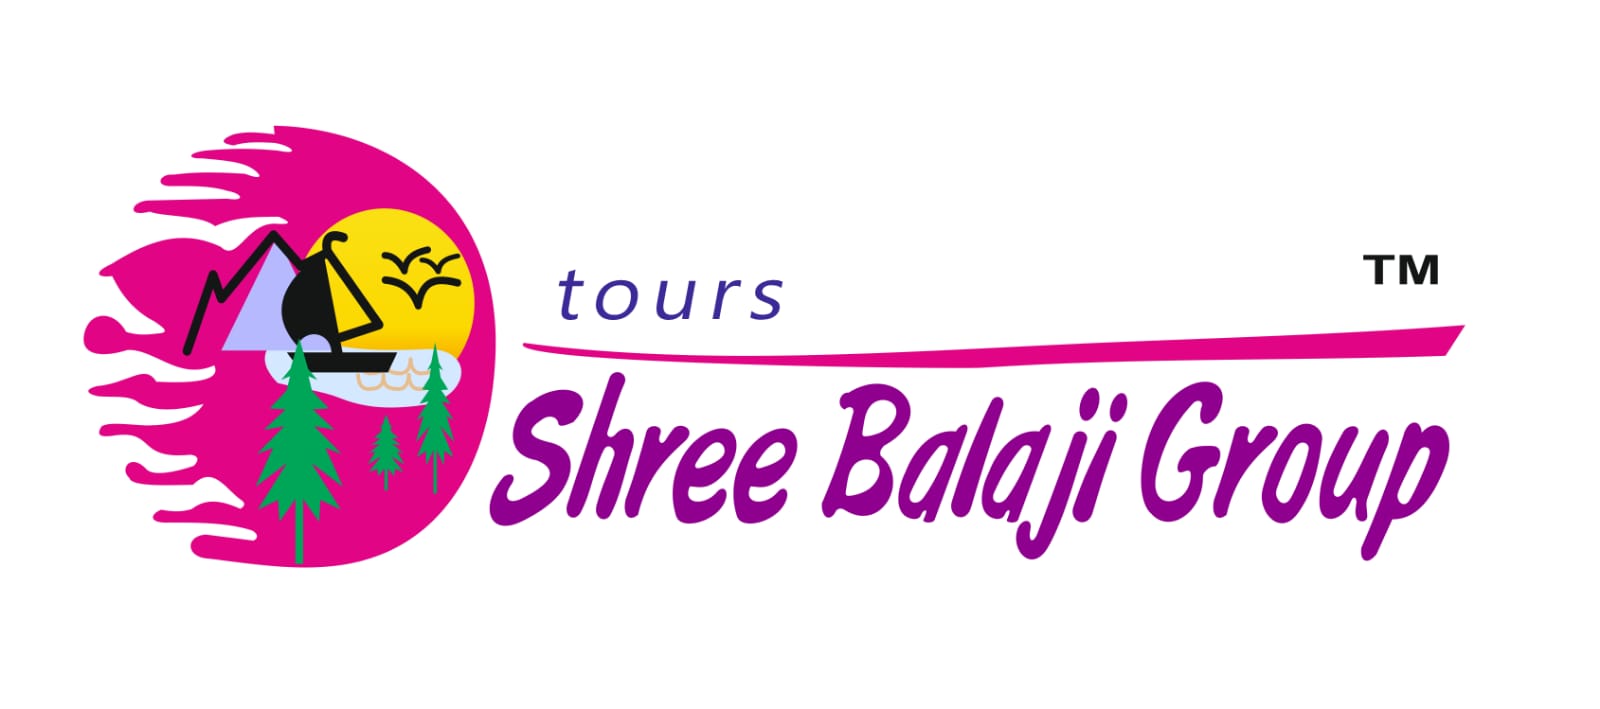 Shree Balaji Group Tours